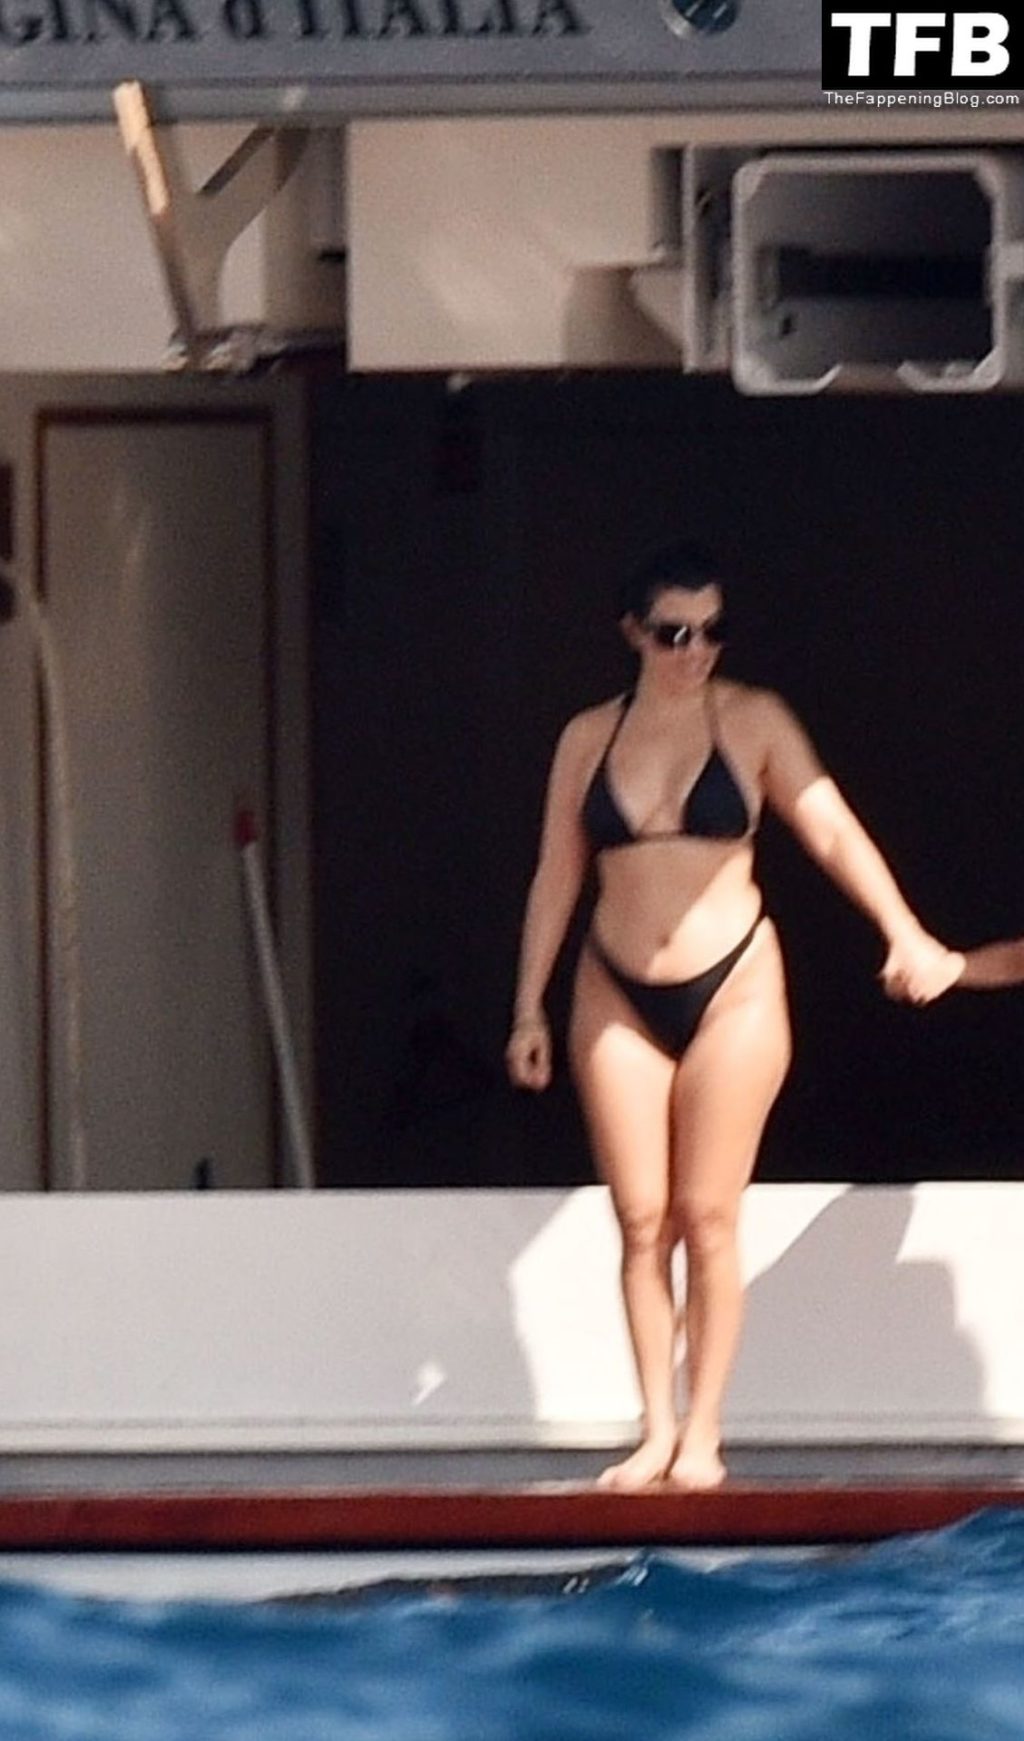 Kourtney Kardashian Sexy The Fappening Blog 32 1 1024x1741 - Kourtney Kardashian Shows Off Her Toned Bikini Body While Enjoying Some Quality Time with Travis Barker (48 Photos)